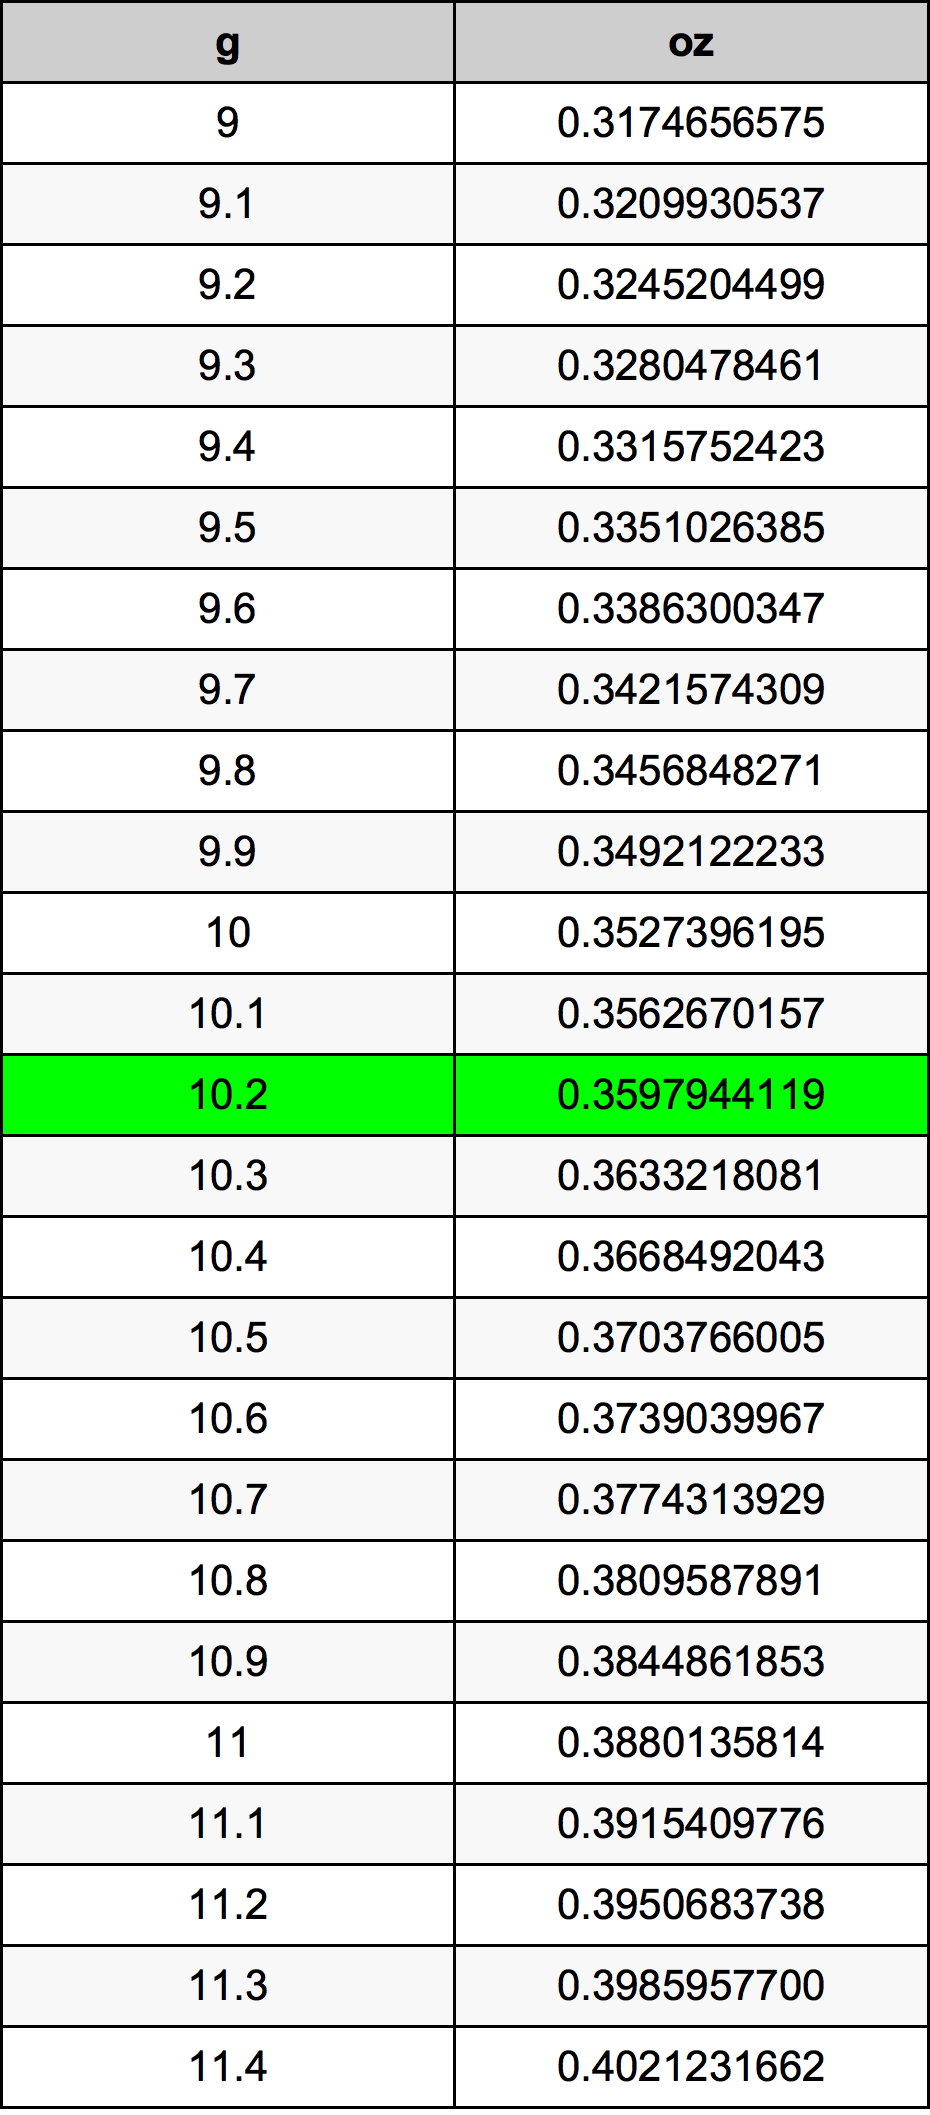 10.2 غرام جدول تحويل